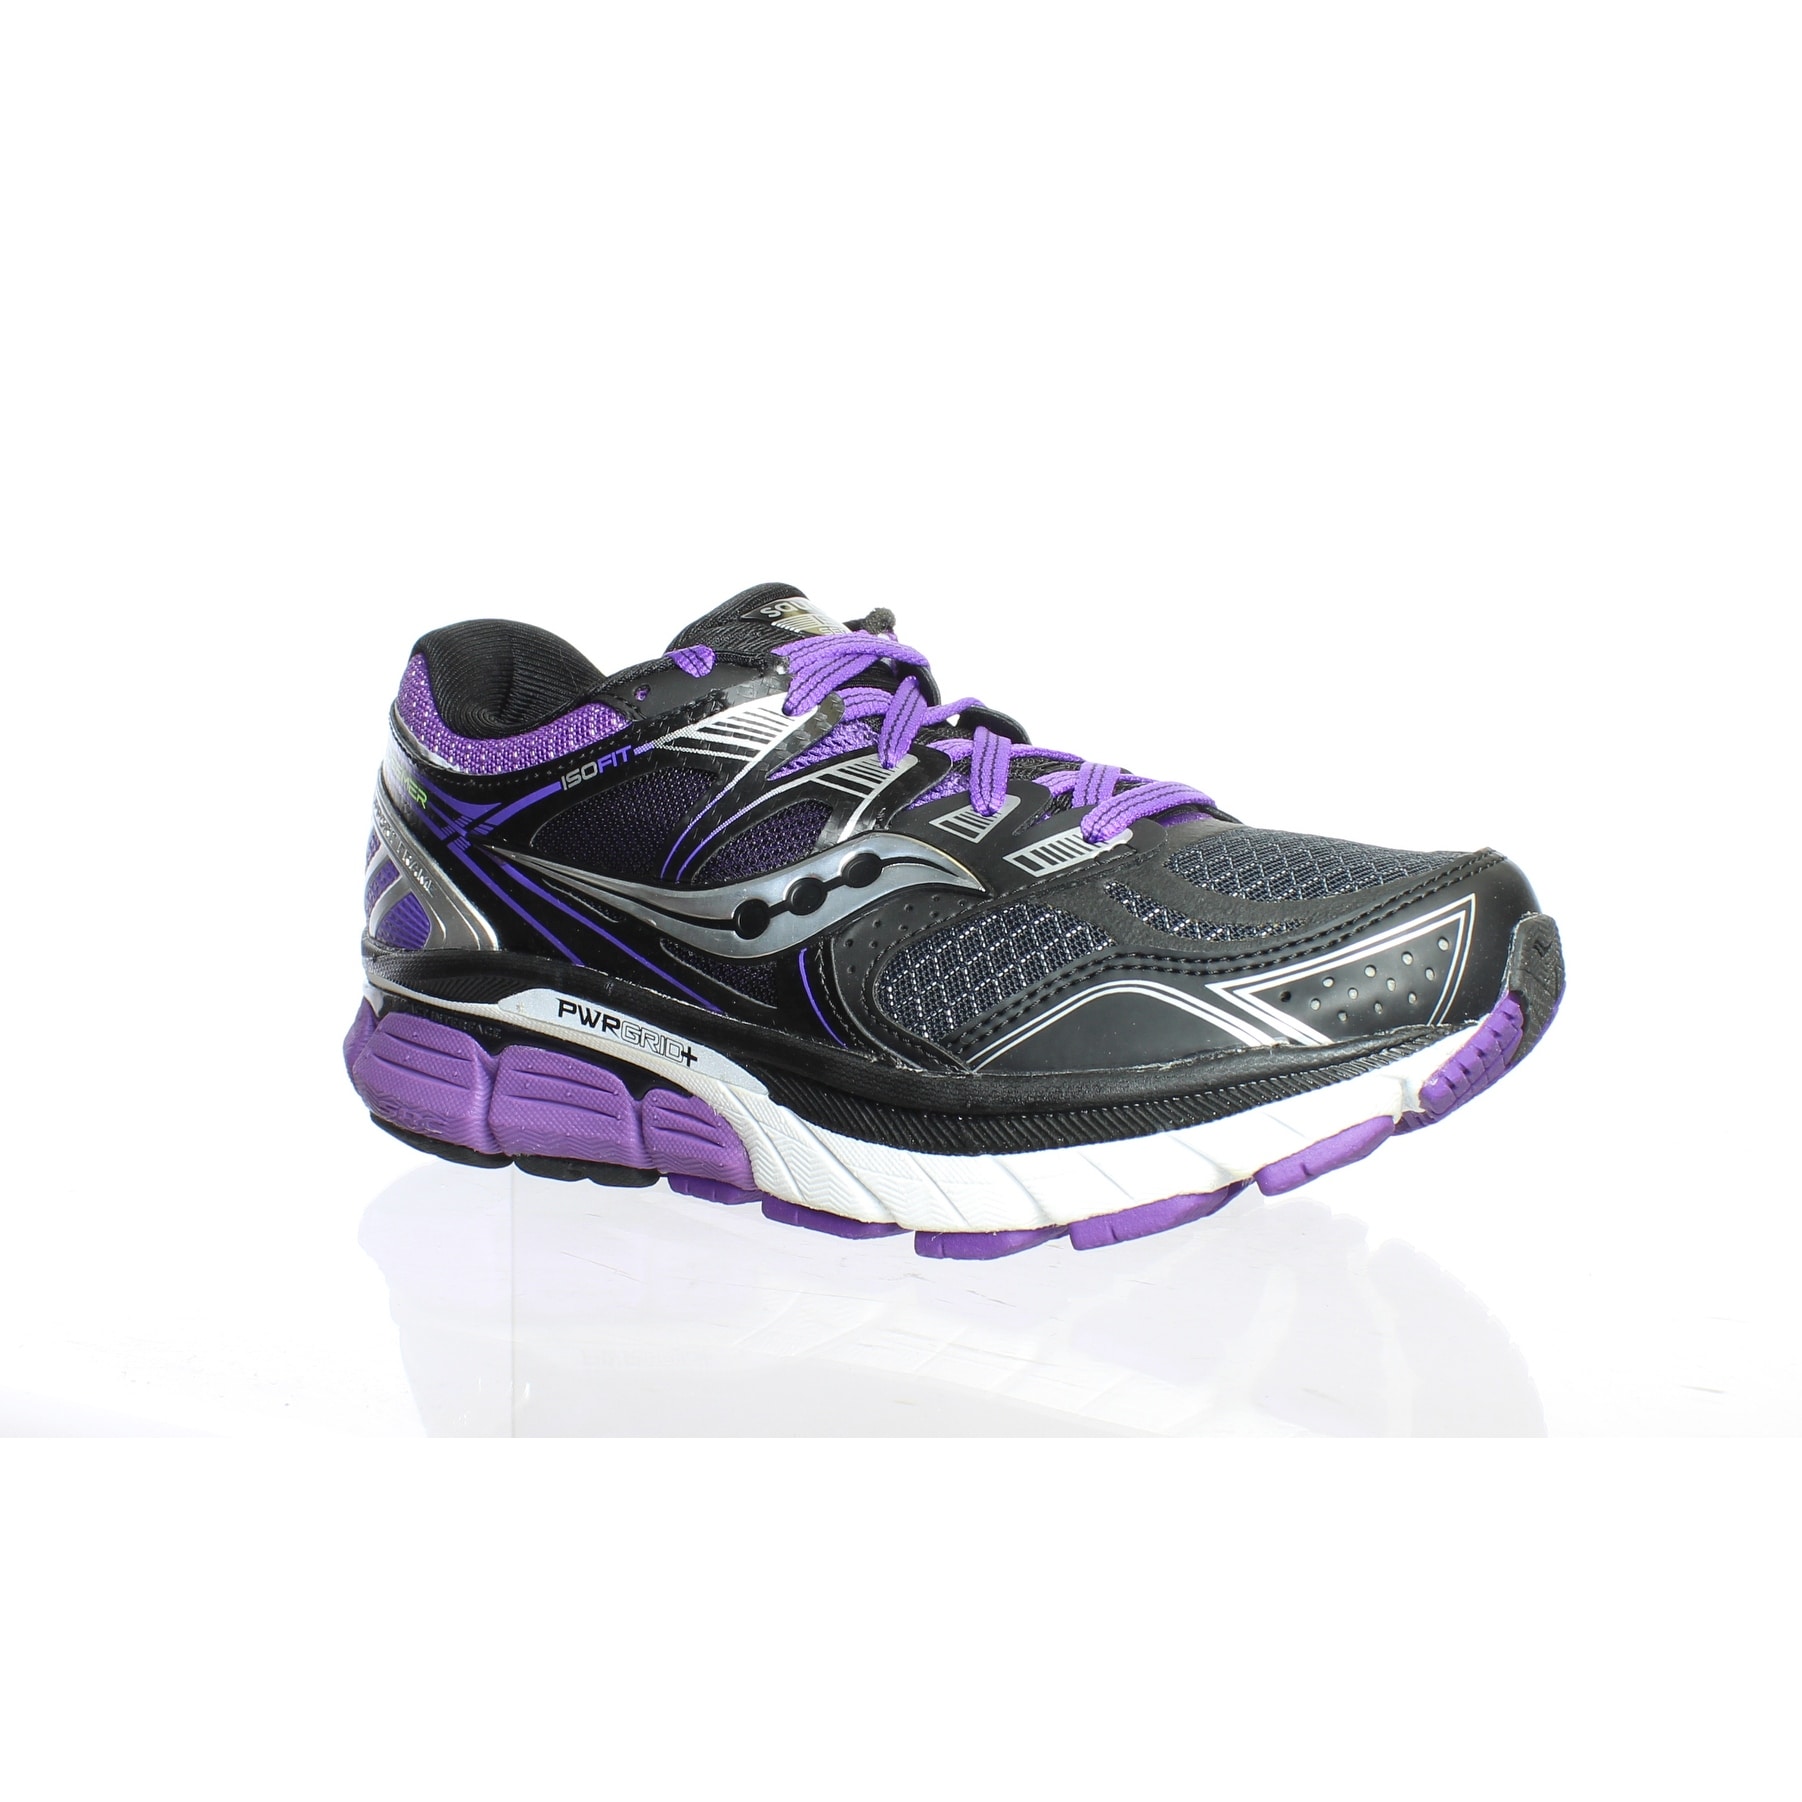 saucony redeemer iso women's shoes black/purple